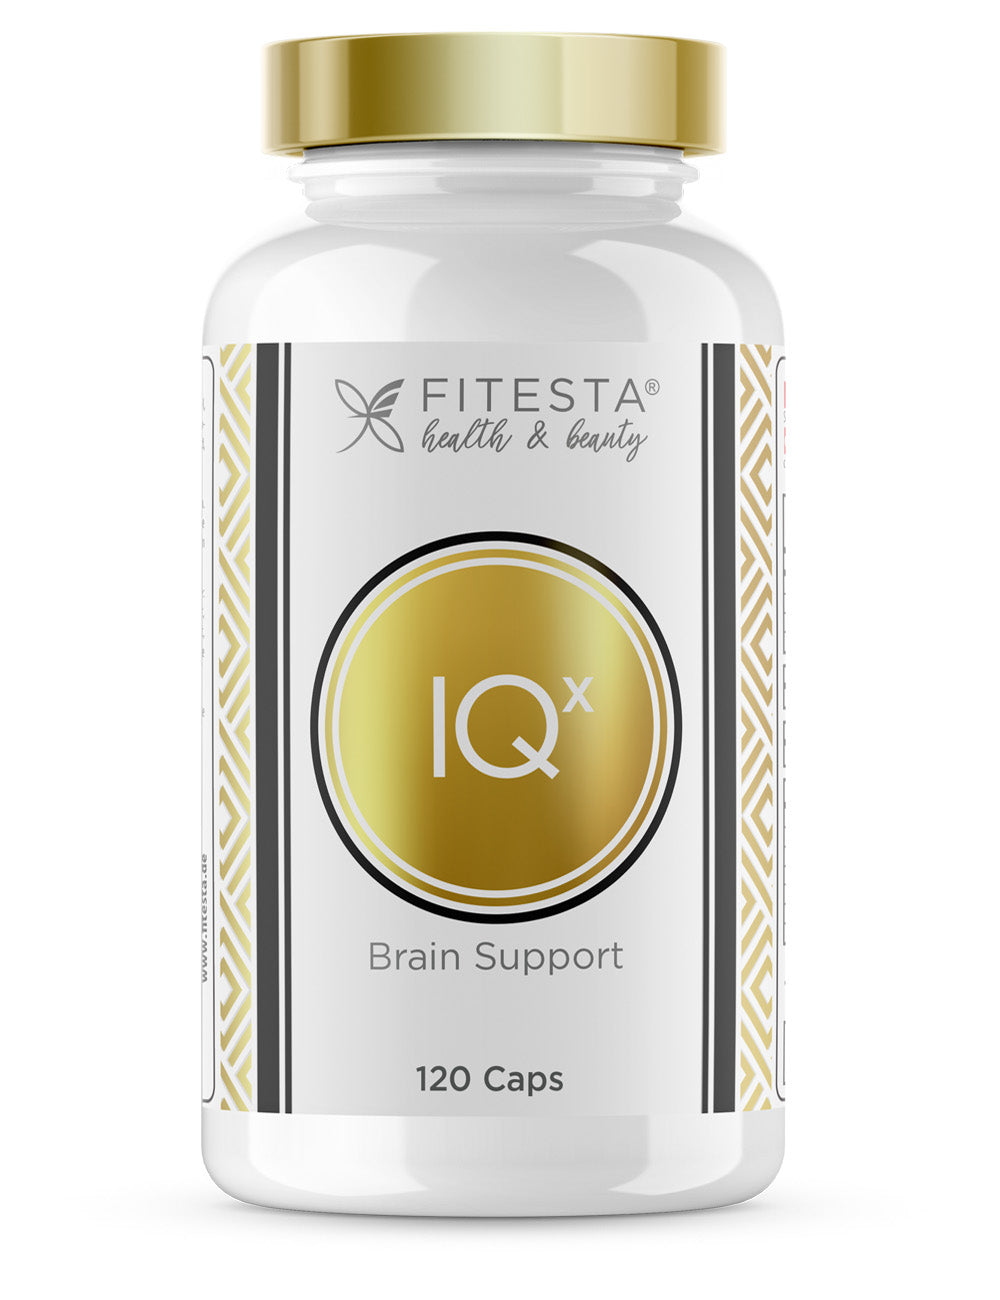 IQx Brain Support - 120 Caps